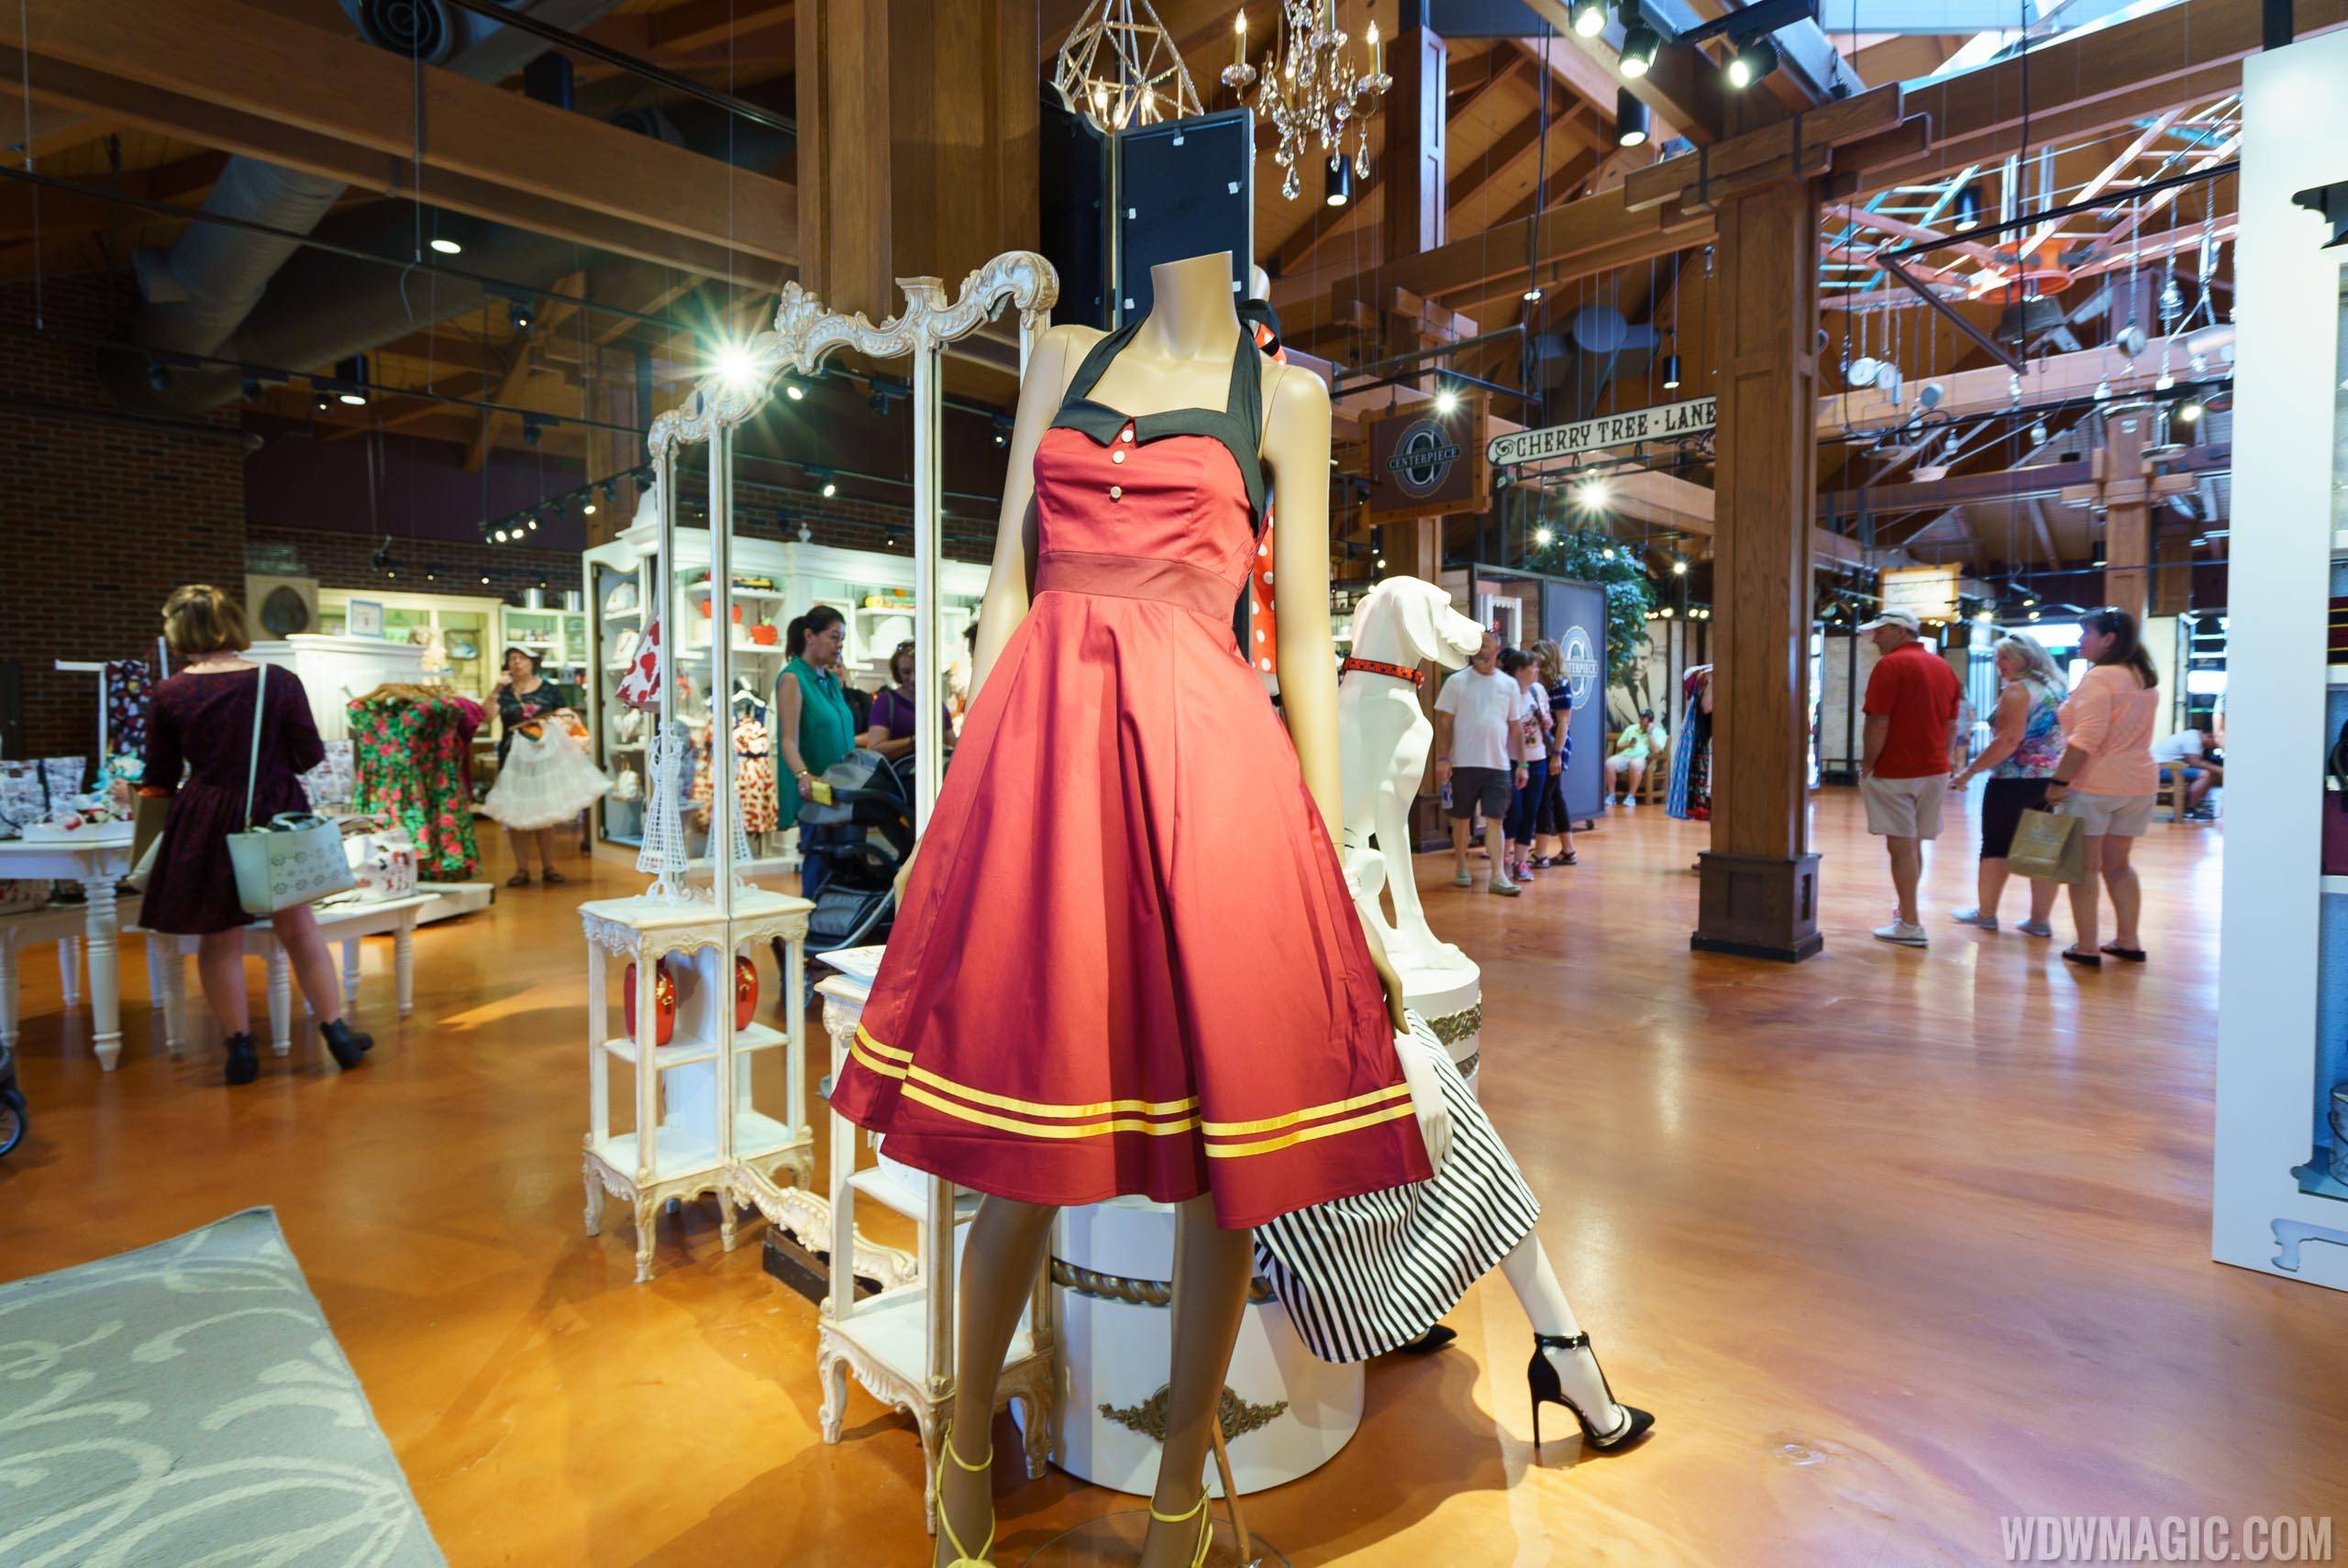 PHOTOS - The Dress Shop on Cherry Tree Lane now open at Disney Springs